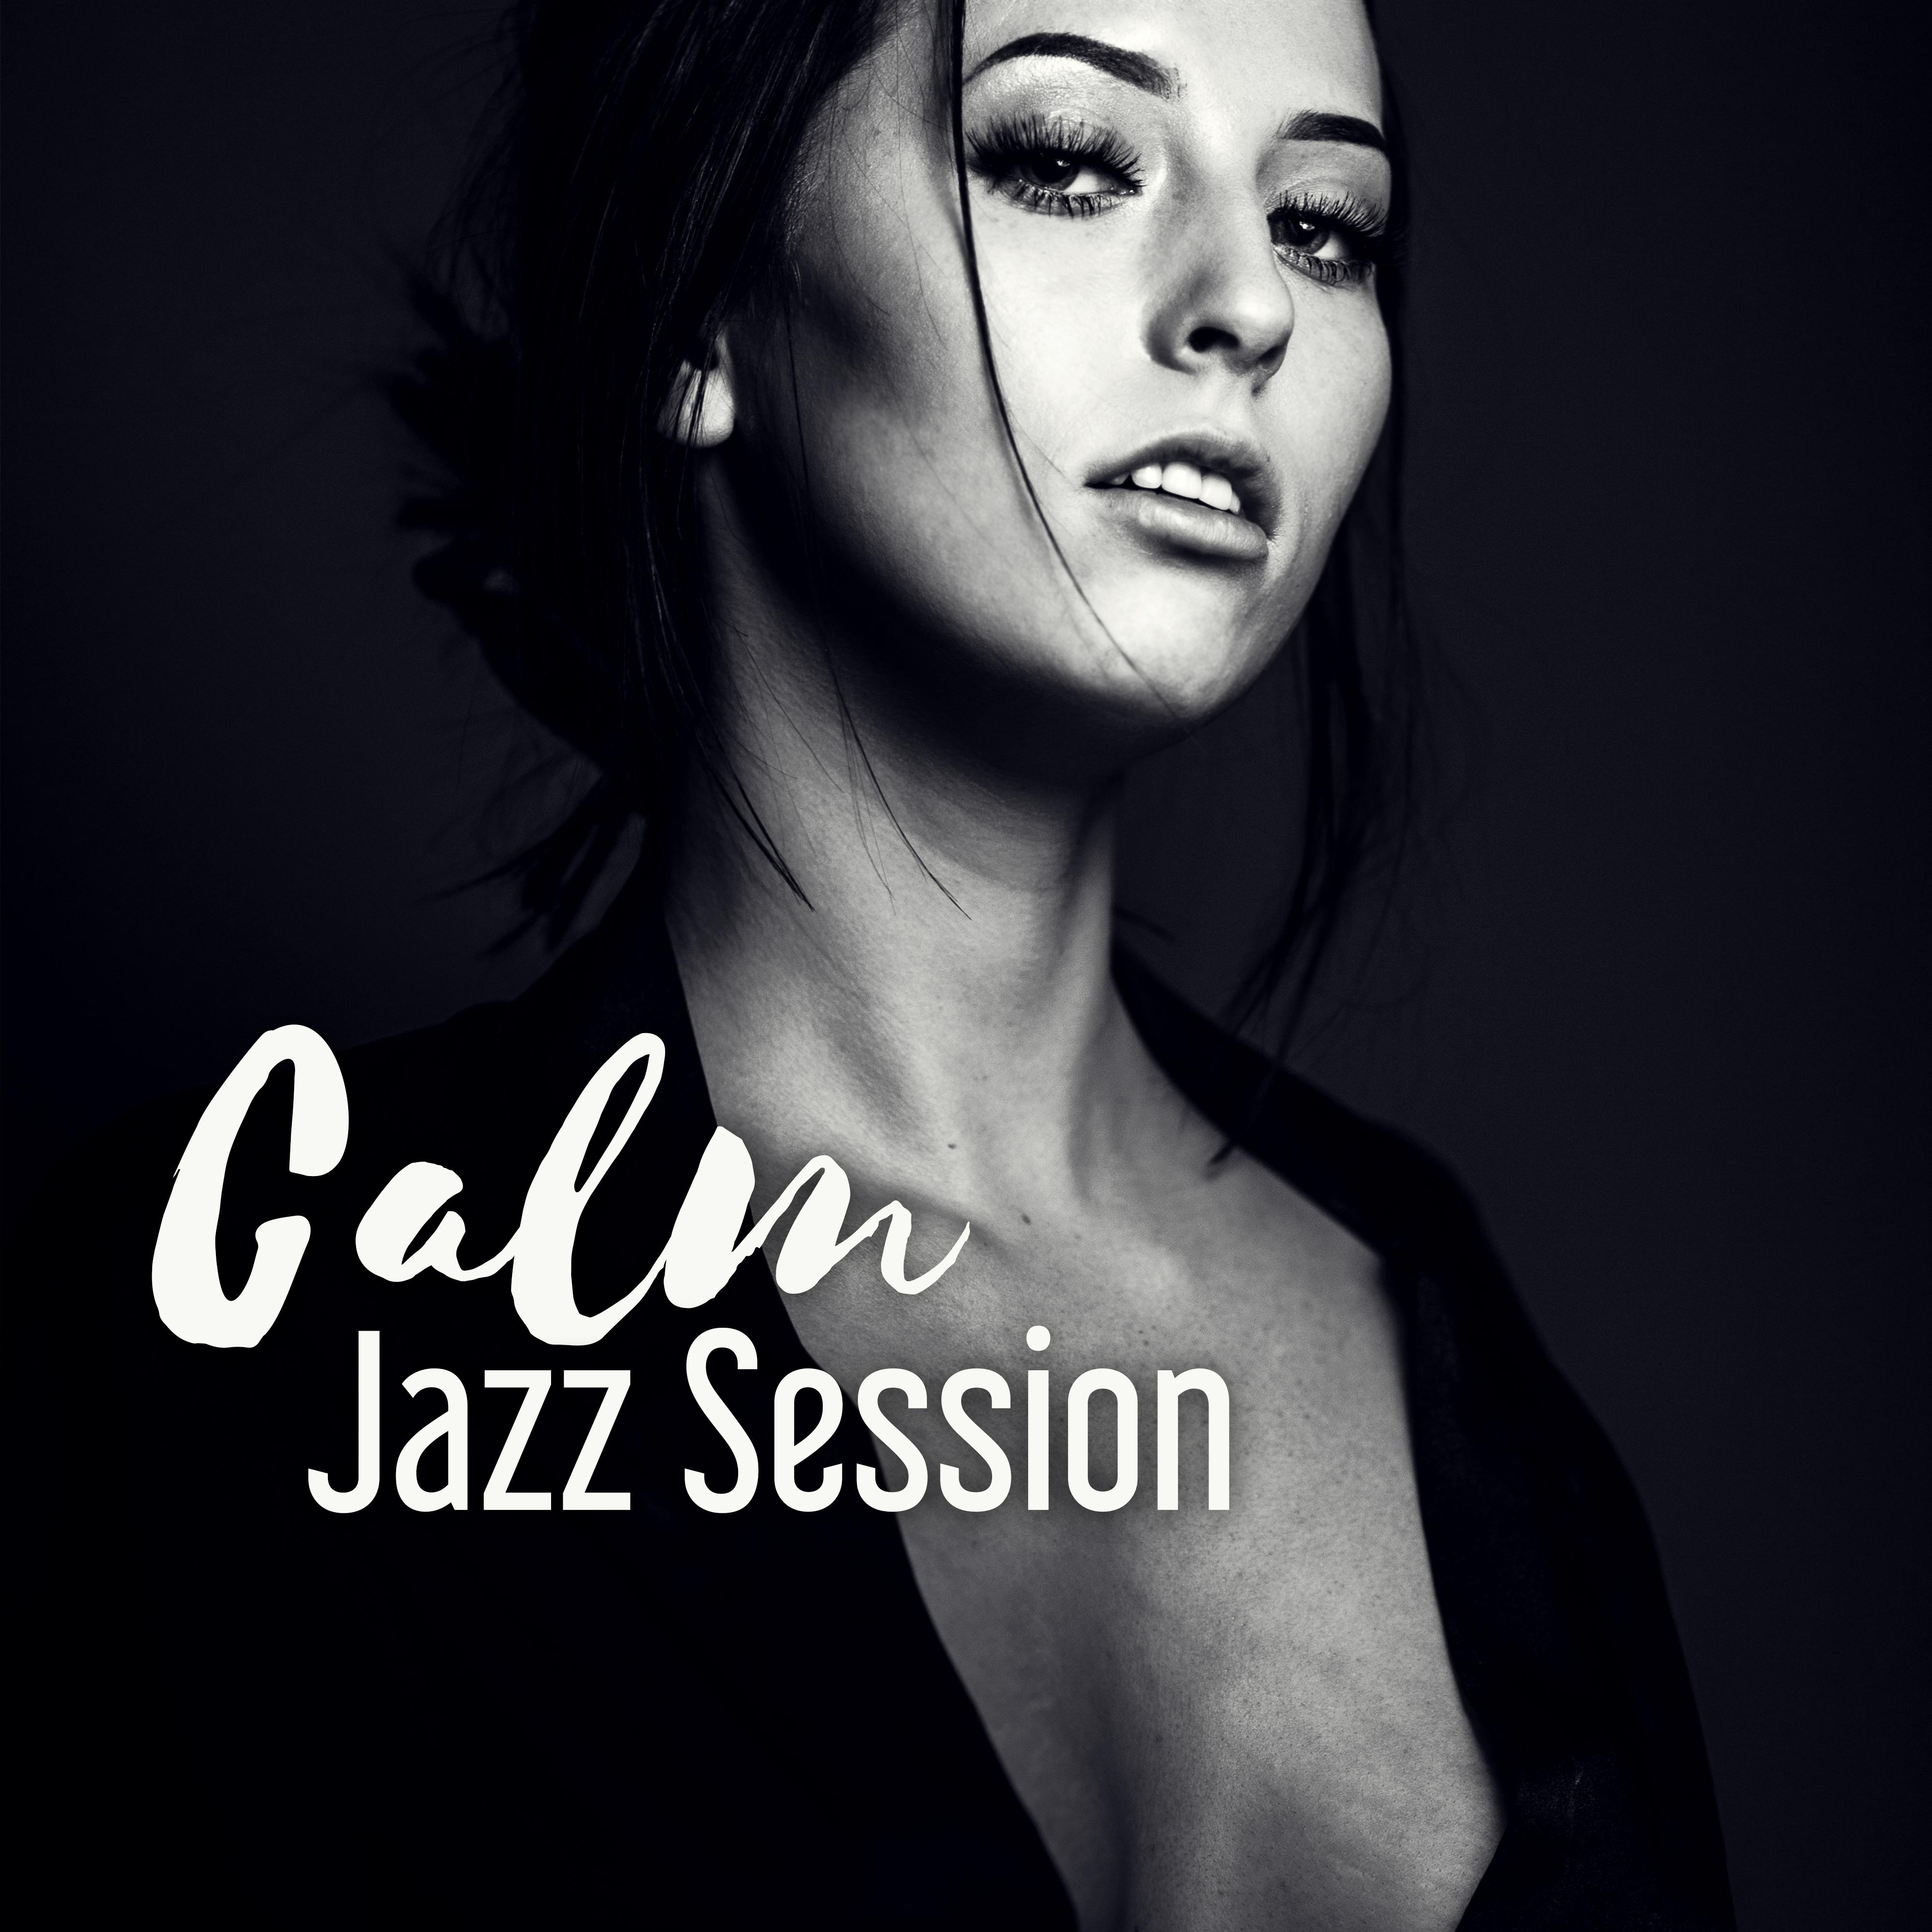 Calm Jazz Session